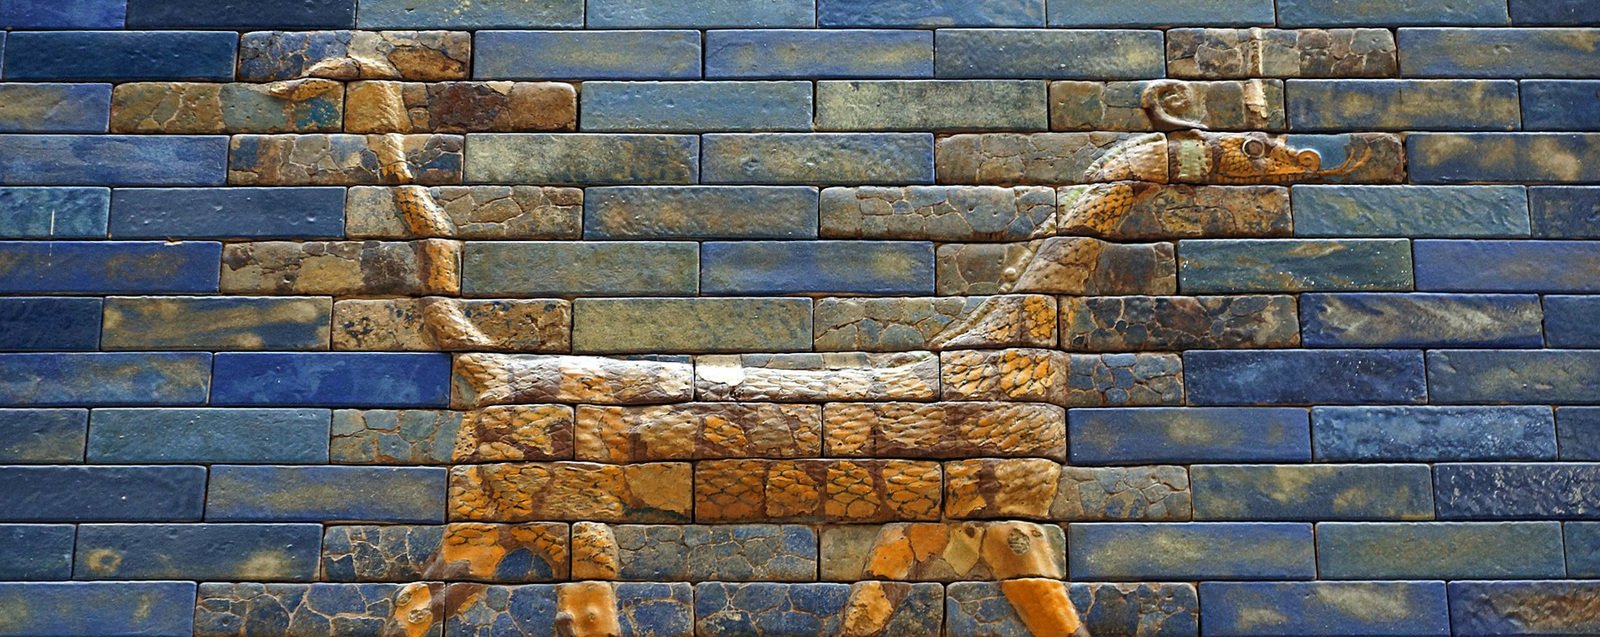 Image: Sirrush, Fragment of the Ishtar Gate of the City of Babylon. Pergamon Museum, Berlin